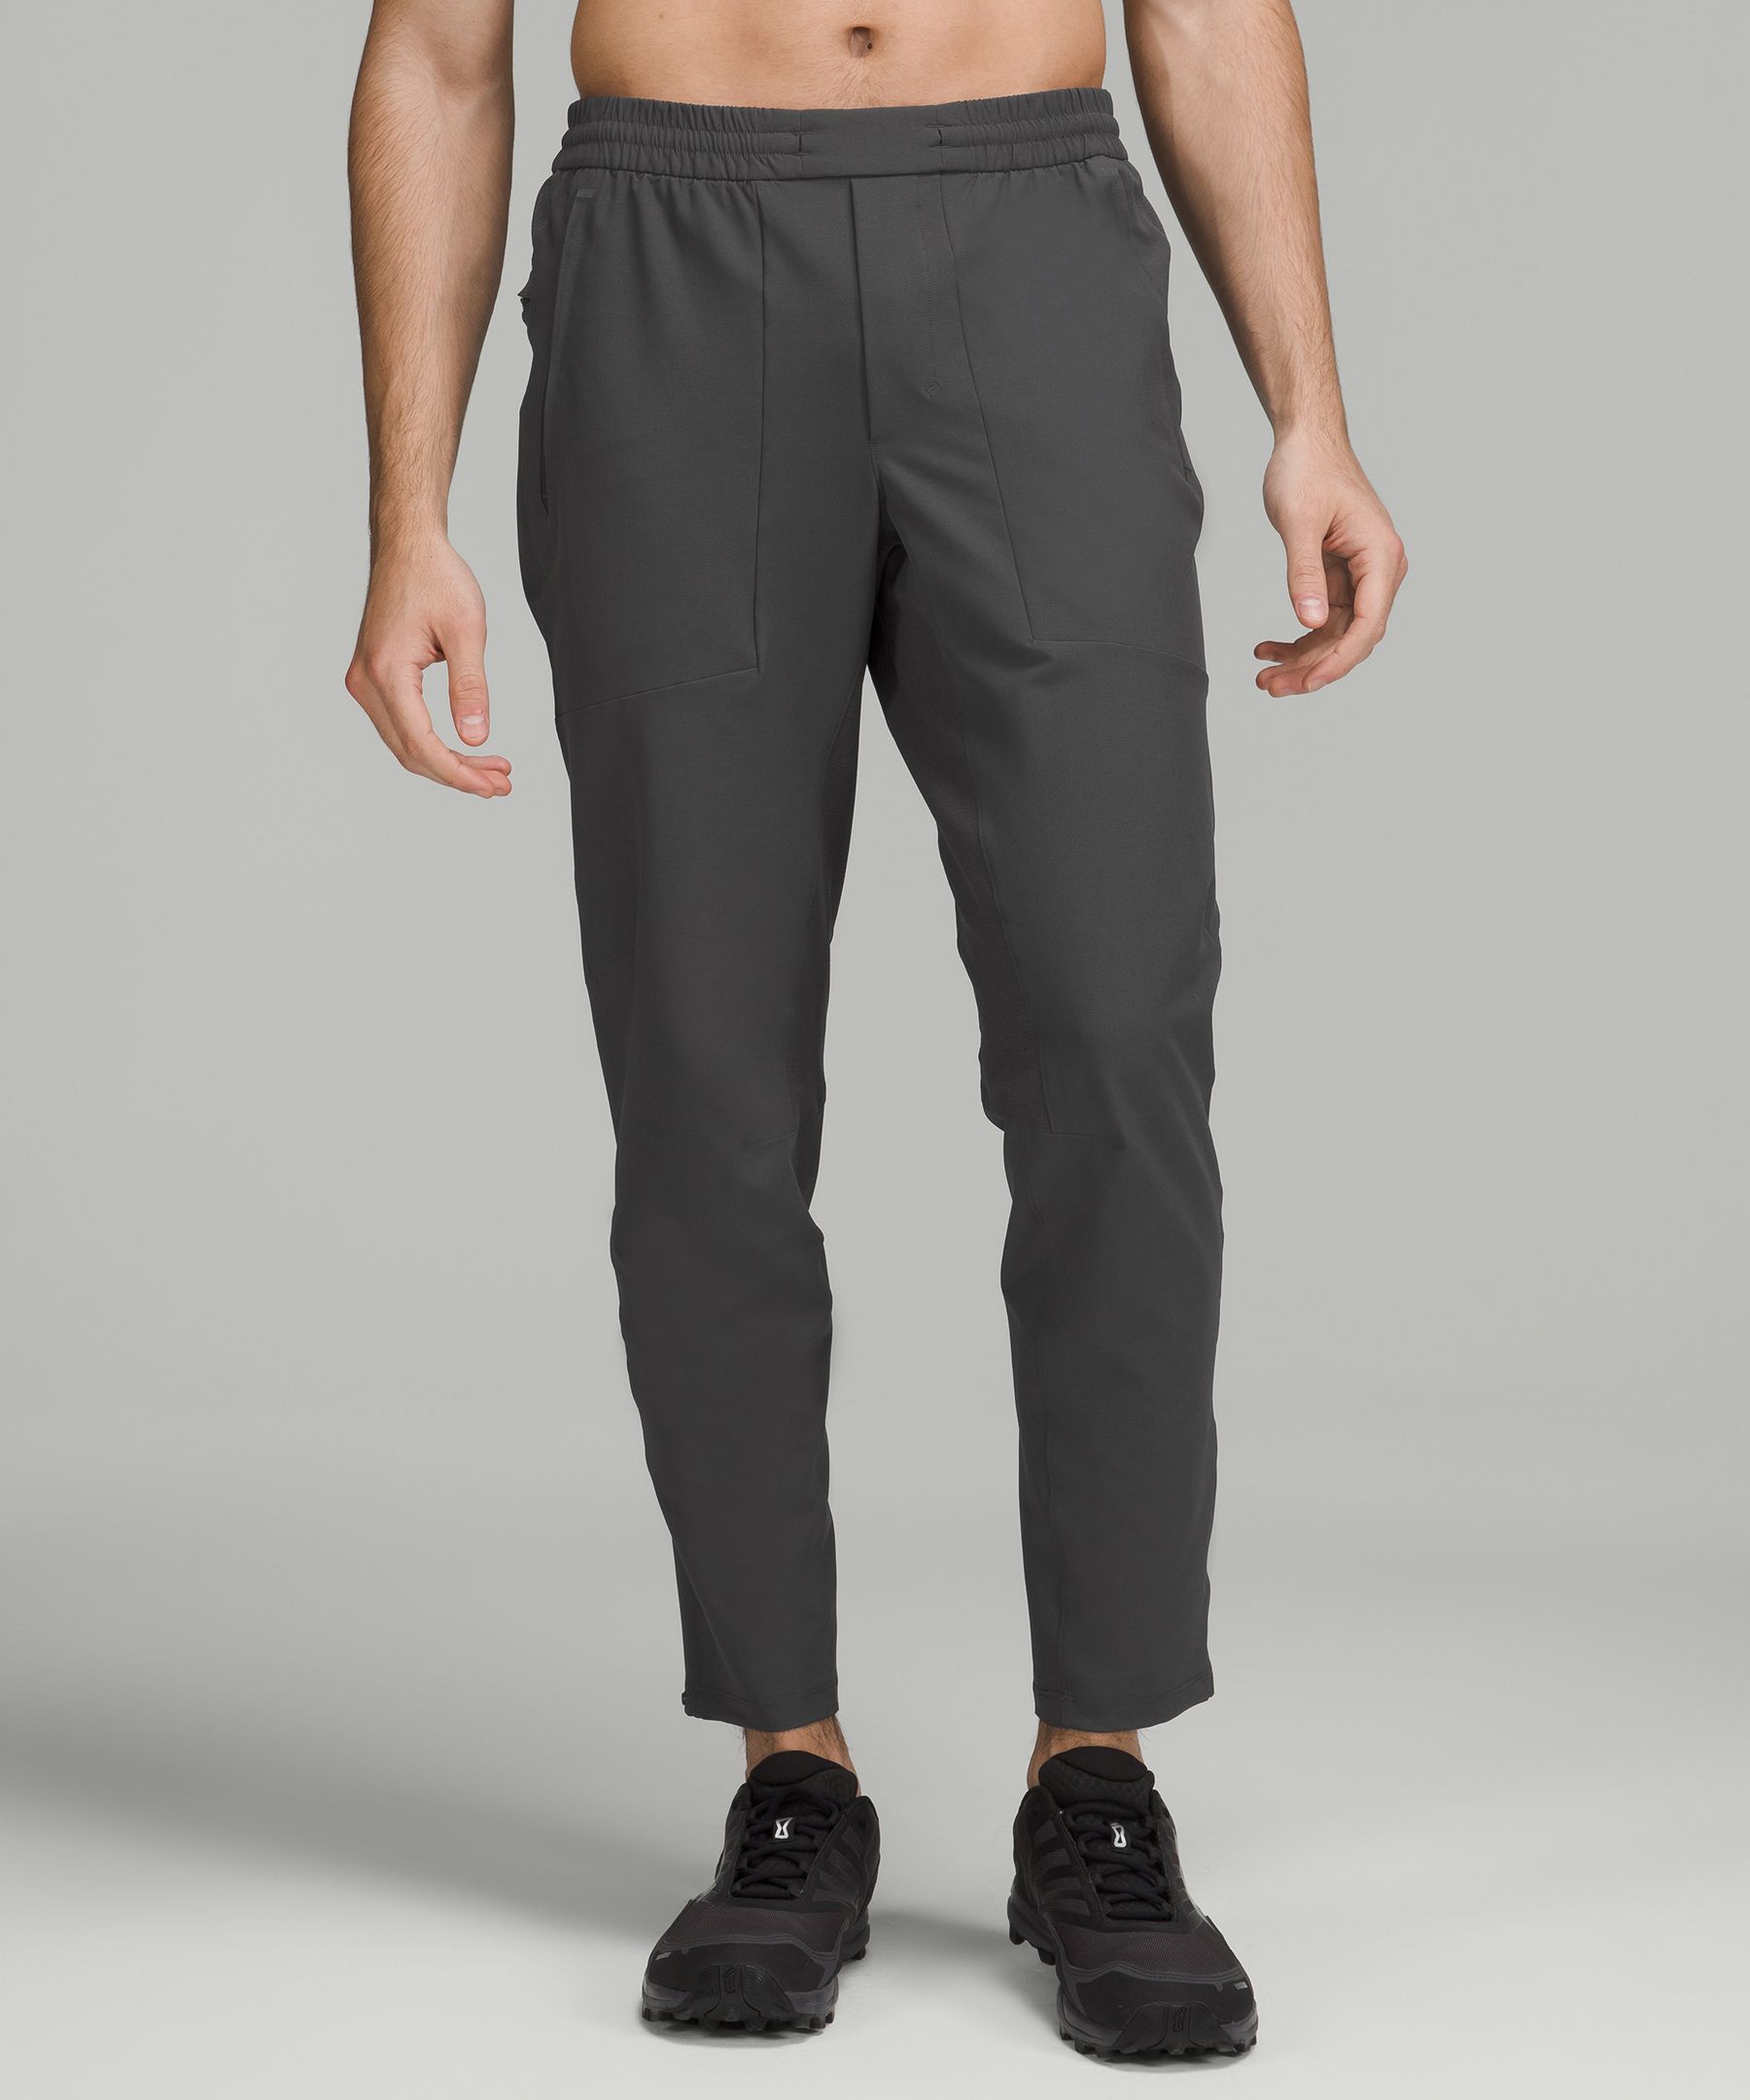 Lululemon License To Train Pants Shorter Length In Graphite Grey